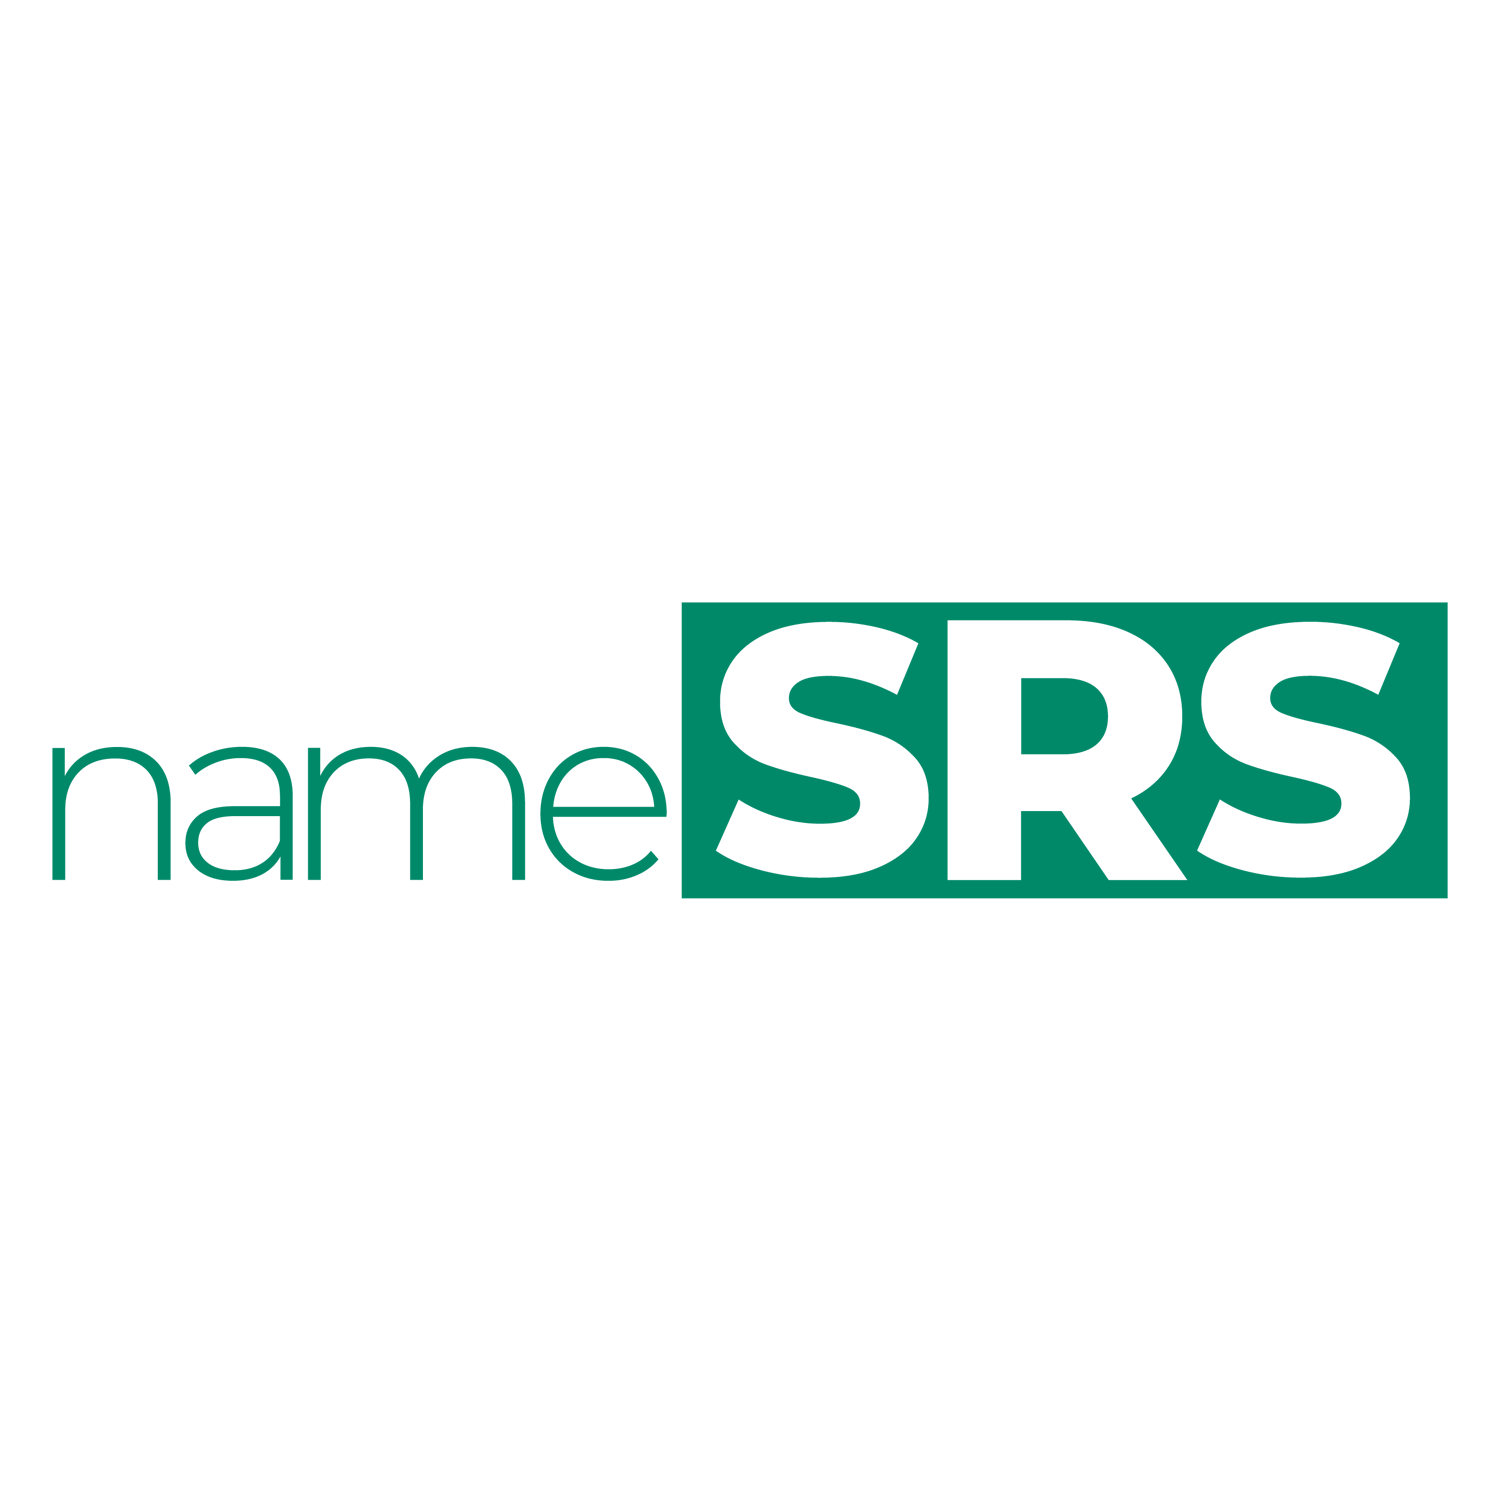 Name SRS